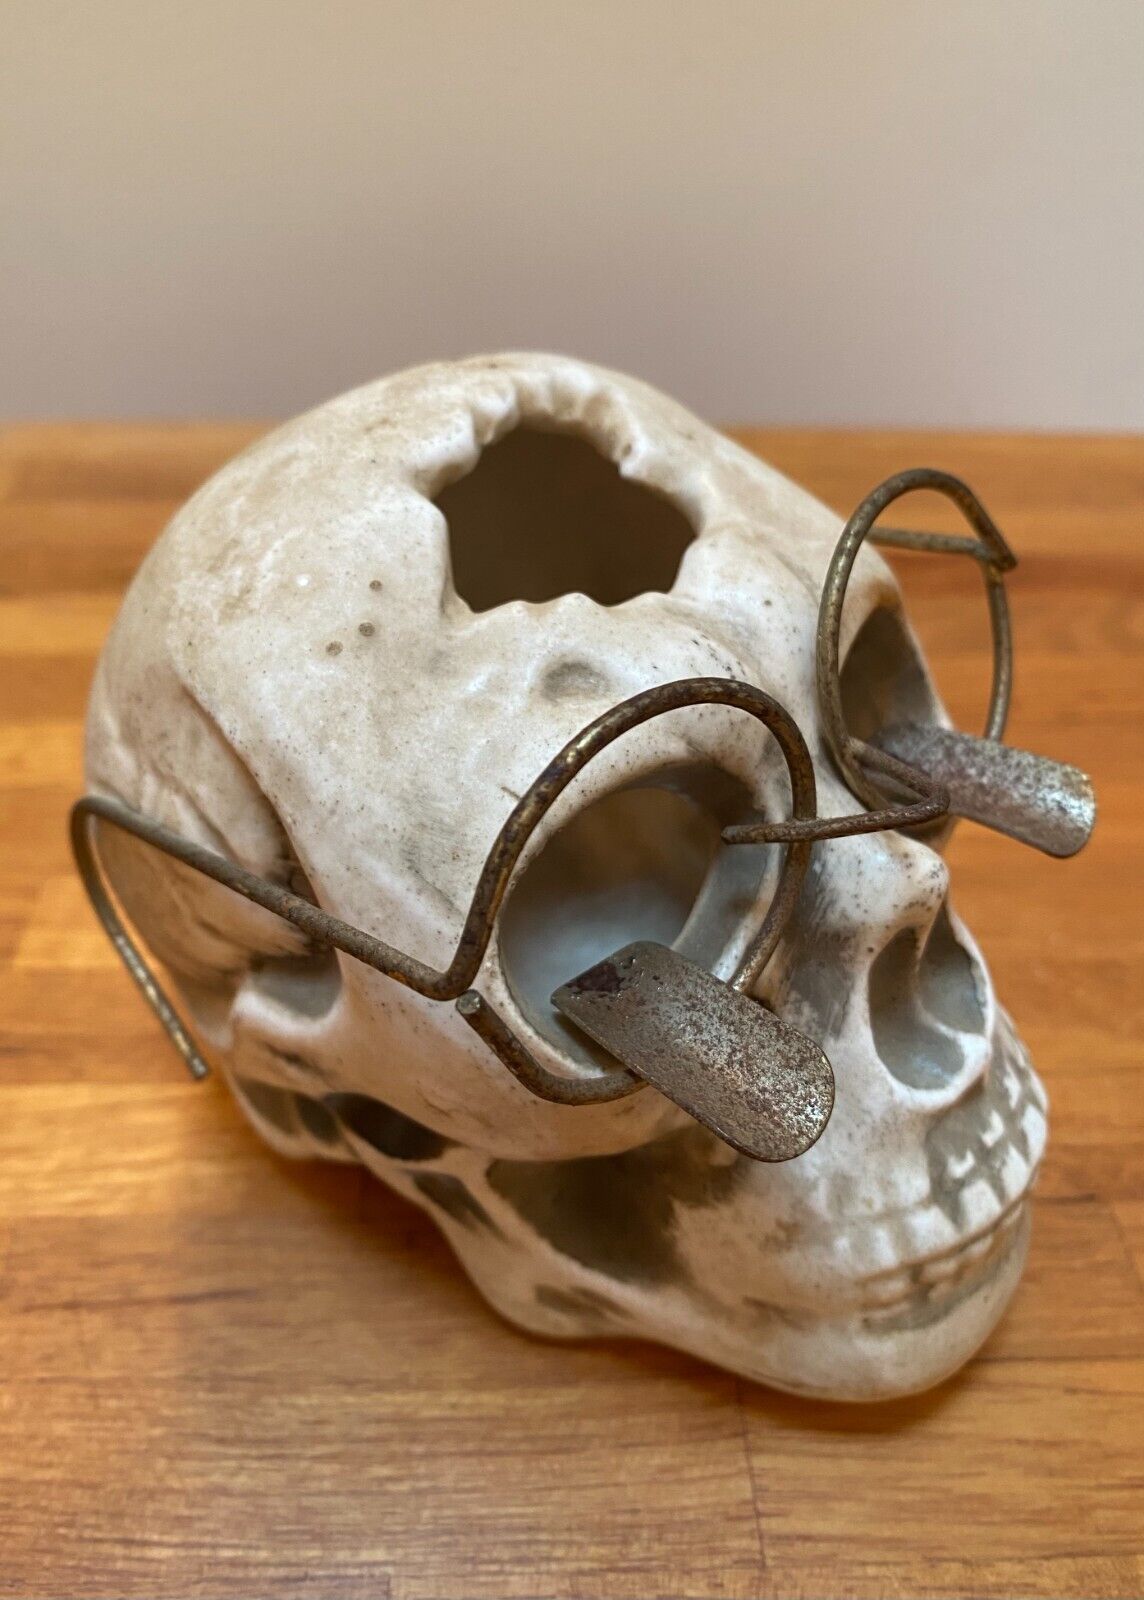 Vintage Ceramic Skull Ashtray With Glasses For Cigarette/Joint/Blunt Rest